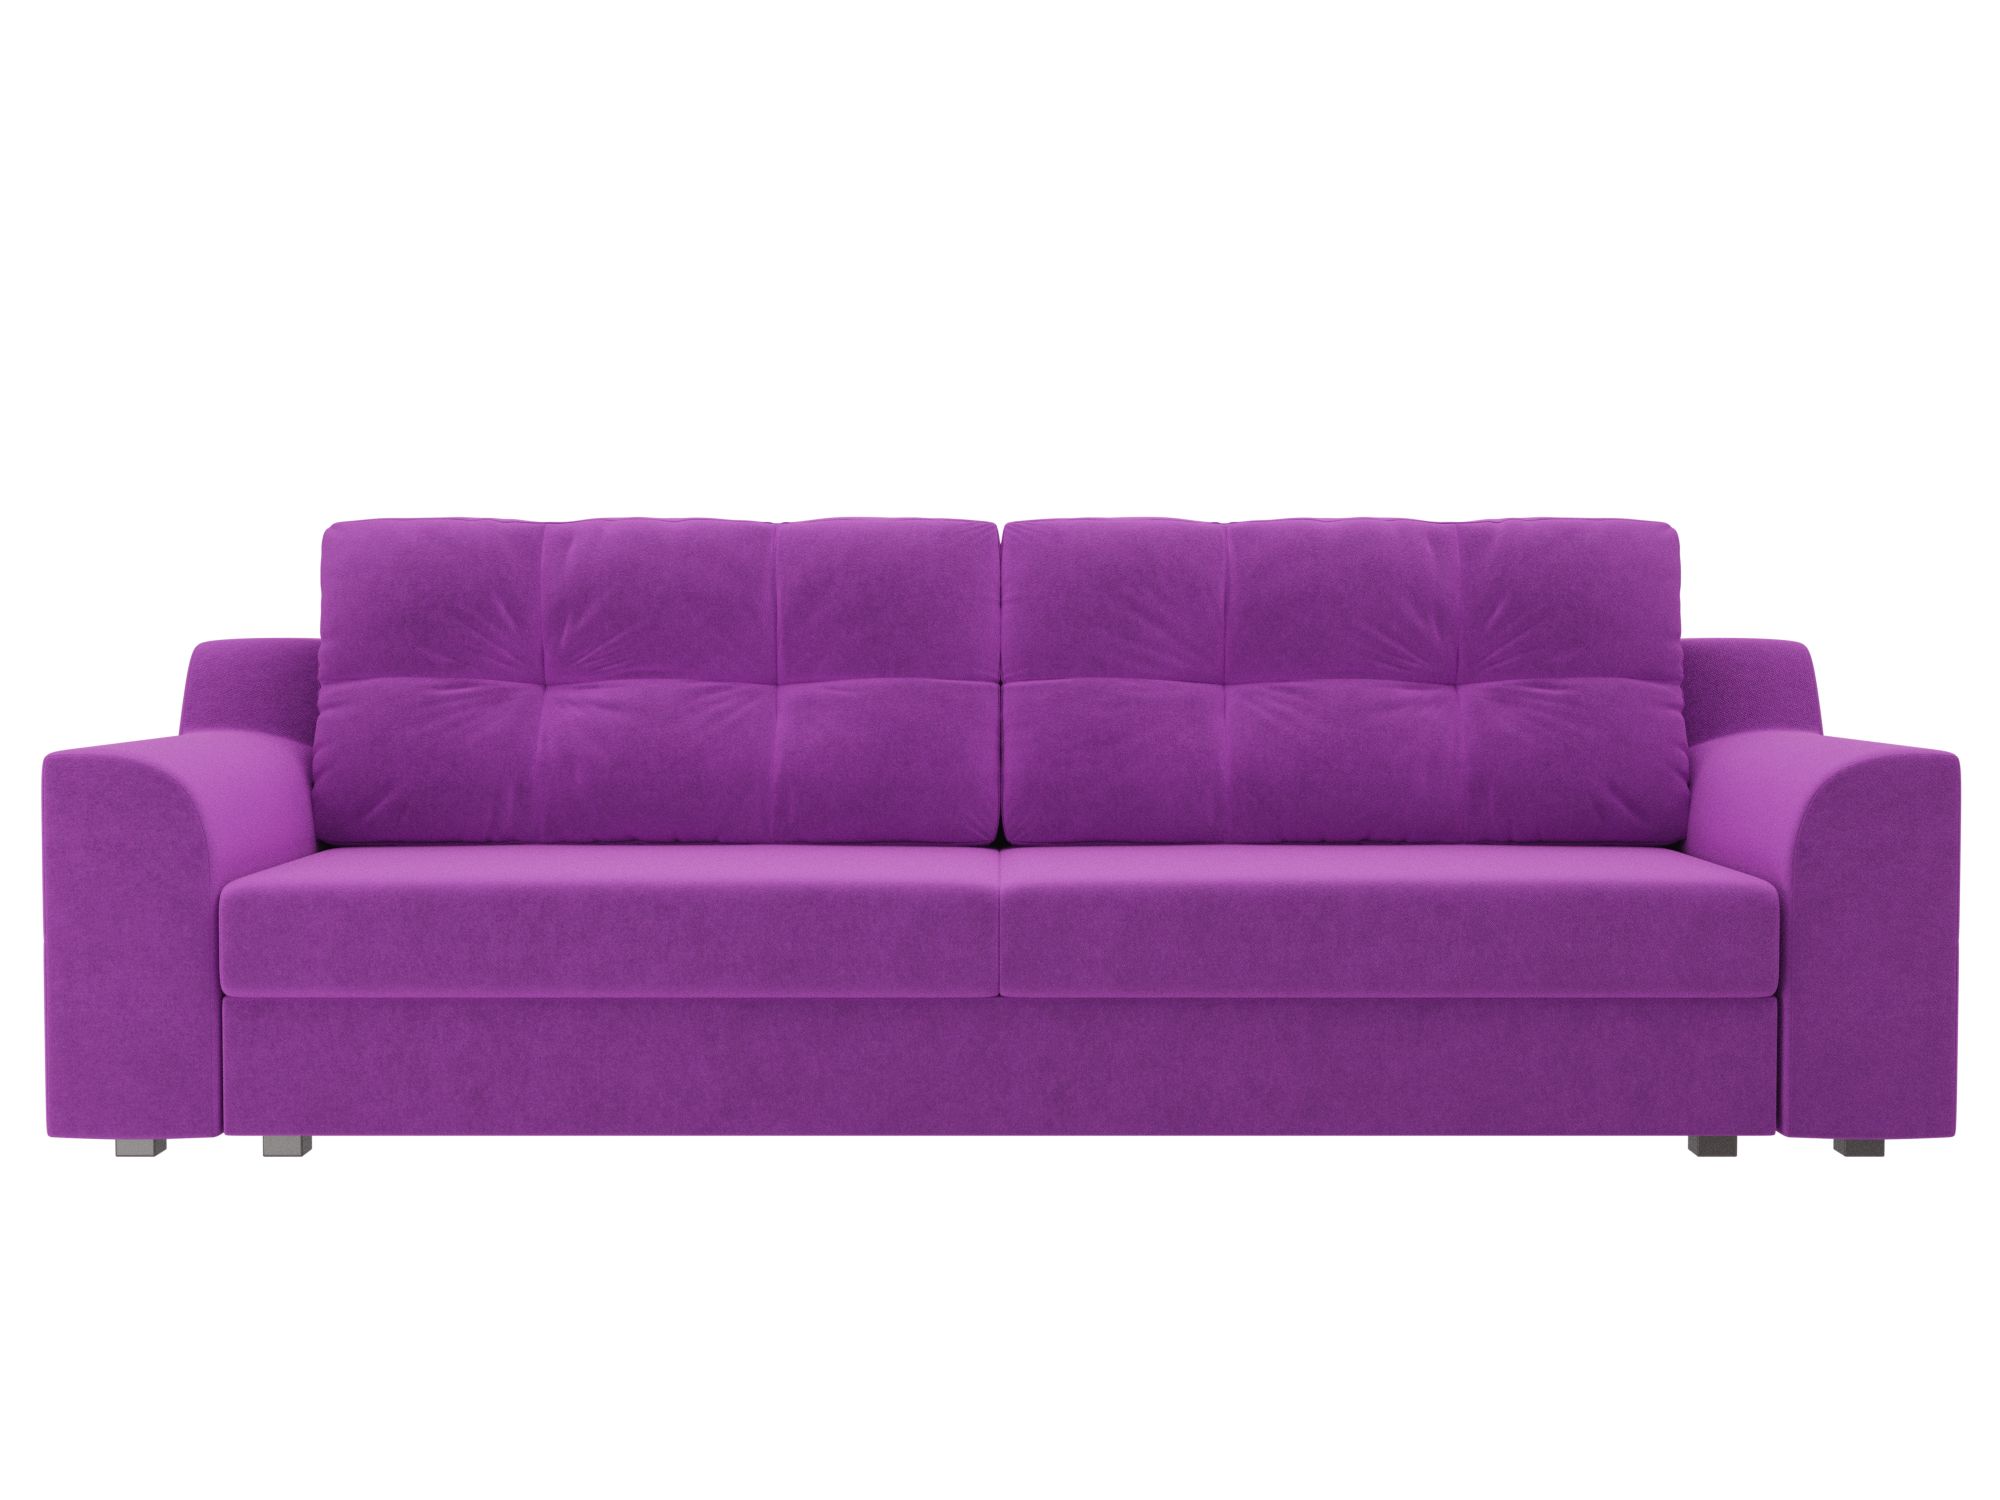 Диван Сансара MebelVia , Фиолетовый, Микровельвет, ЛДСП диван еврокнижка мебелико сатурн микровельвет фиолетовый